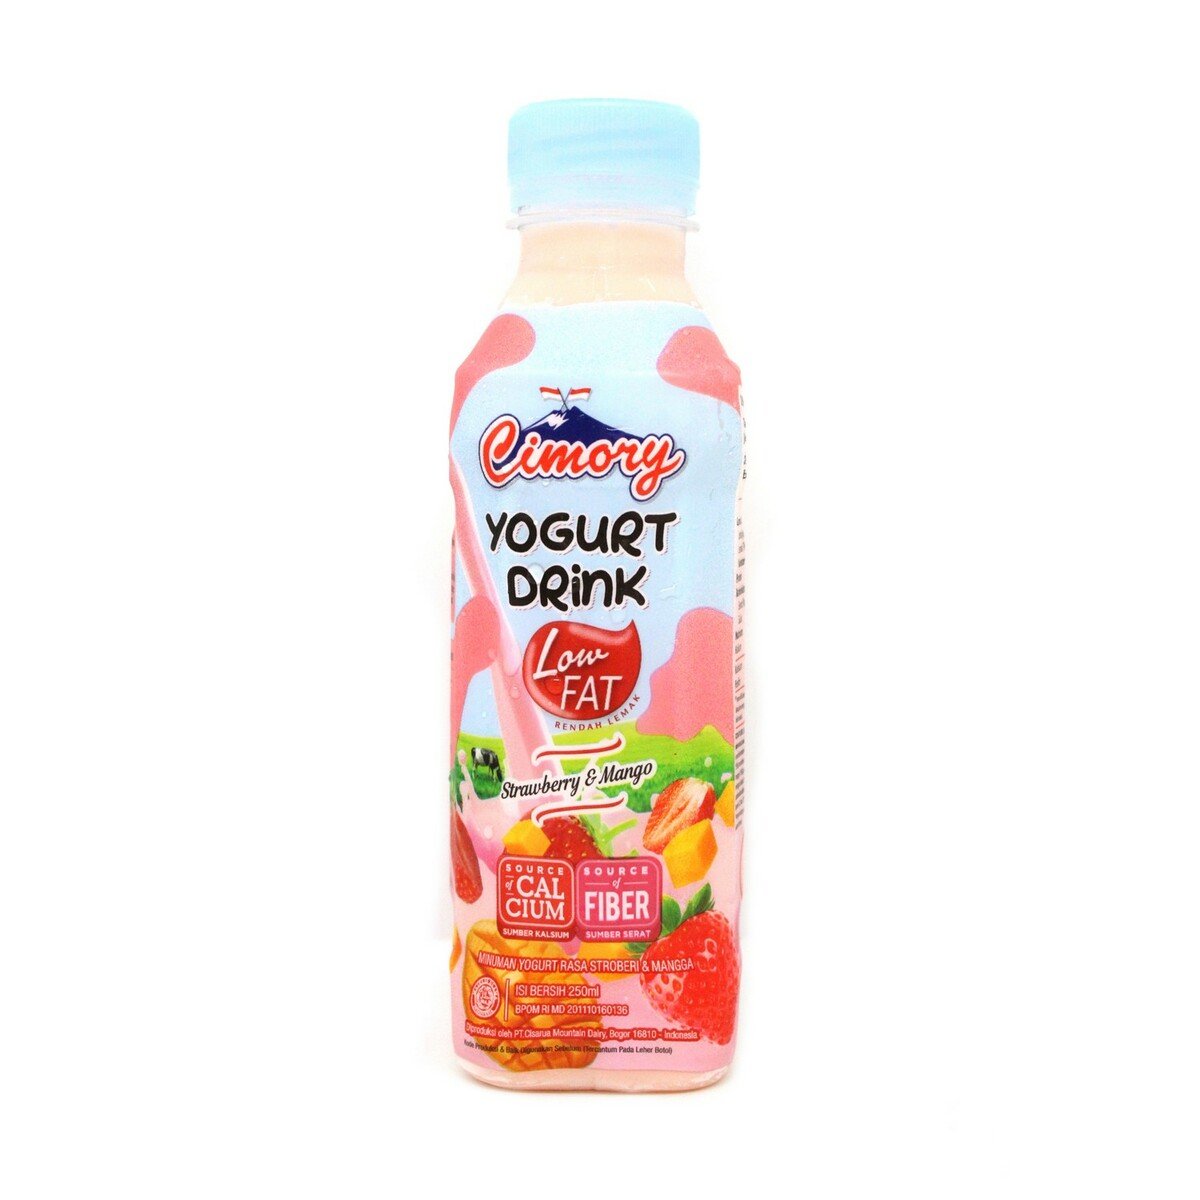 Cimory Yogurt Drink Low Fat Strawberry Manggo 250ml